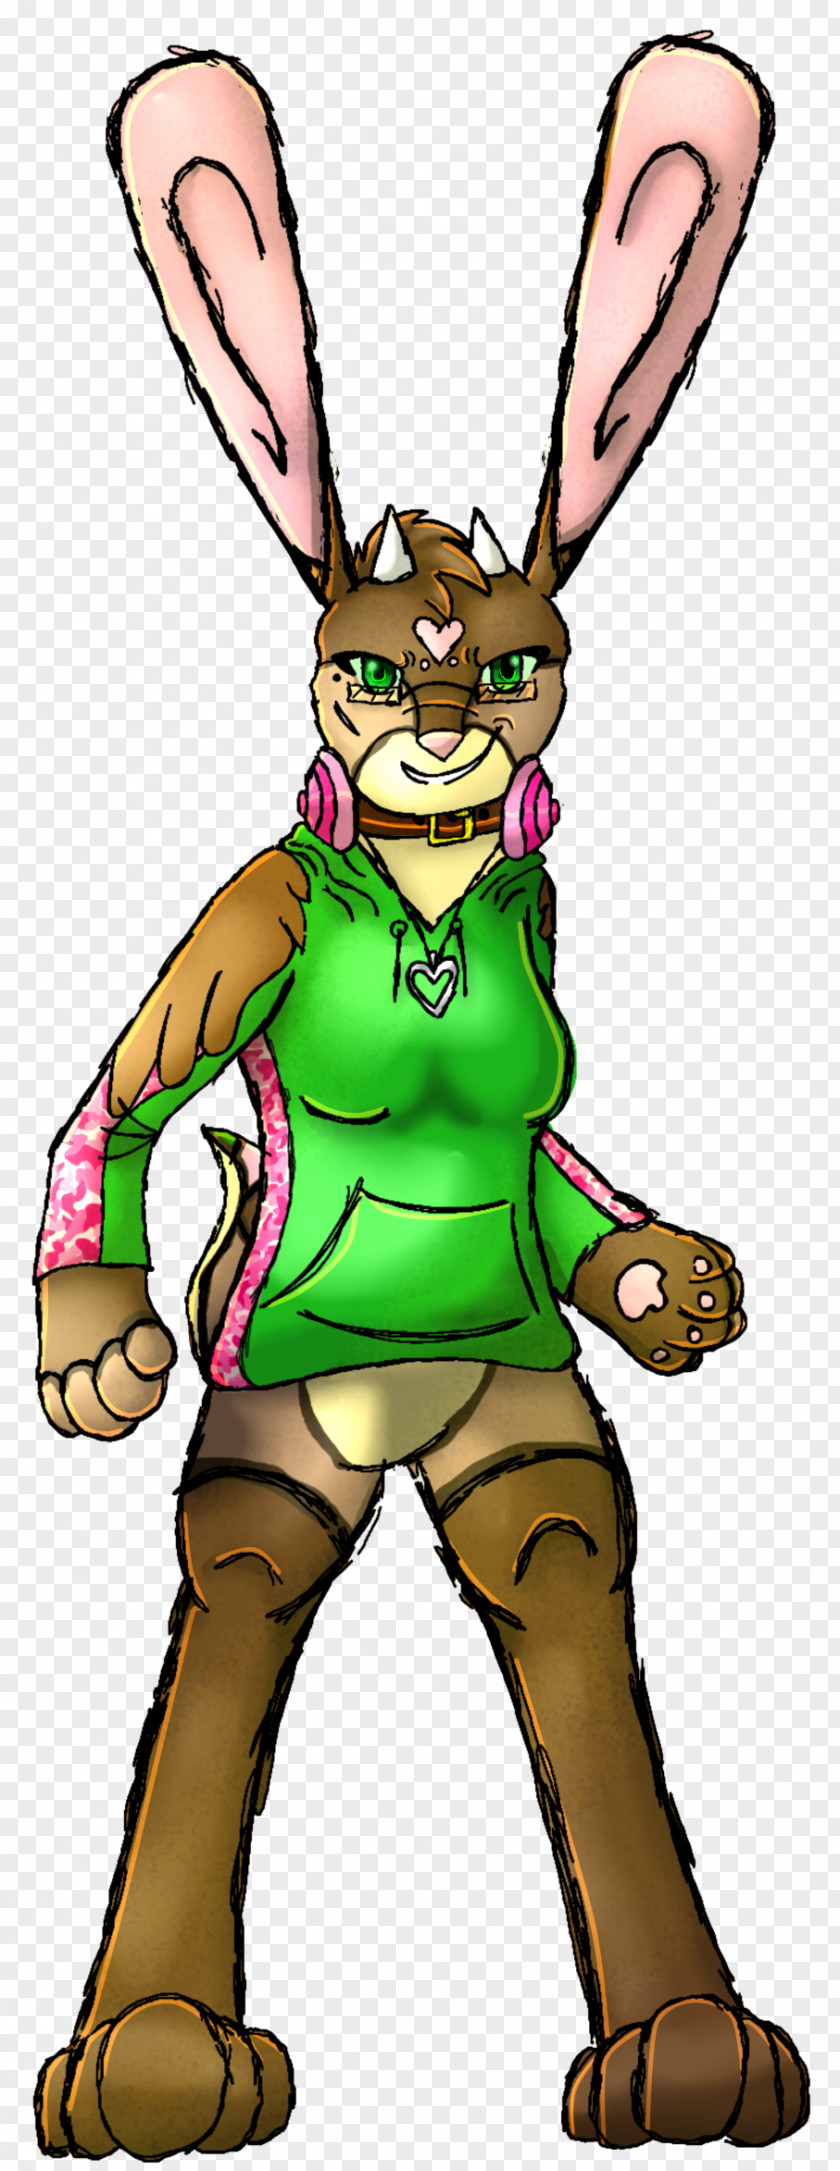 Hare Cartoon Character Clip Art PNG